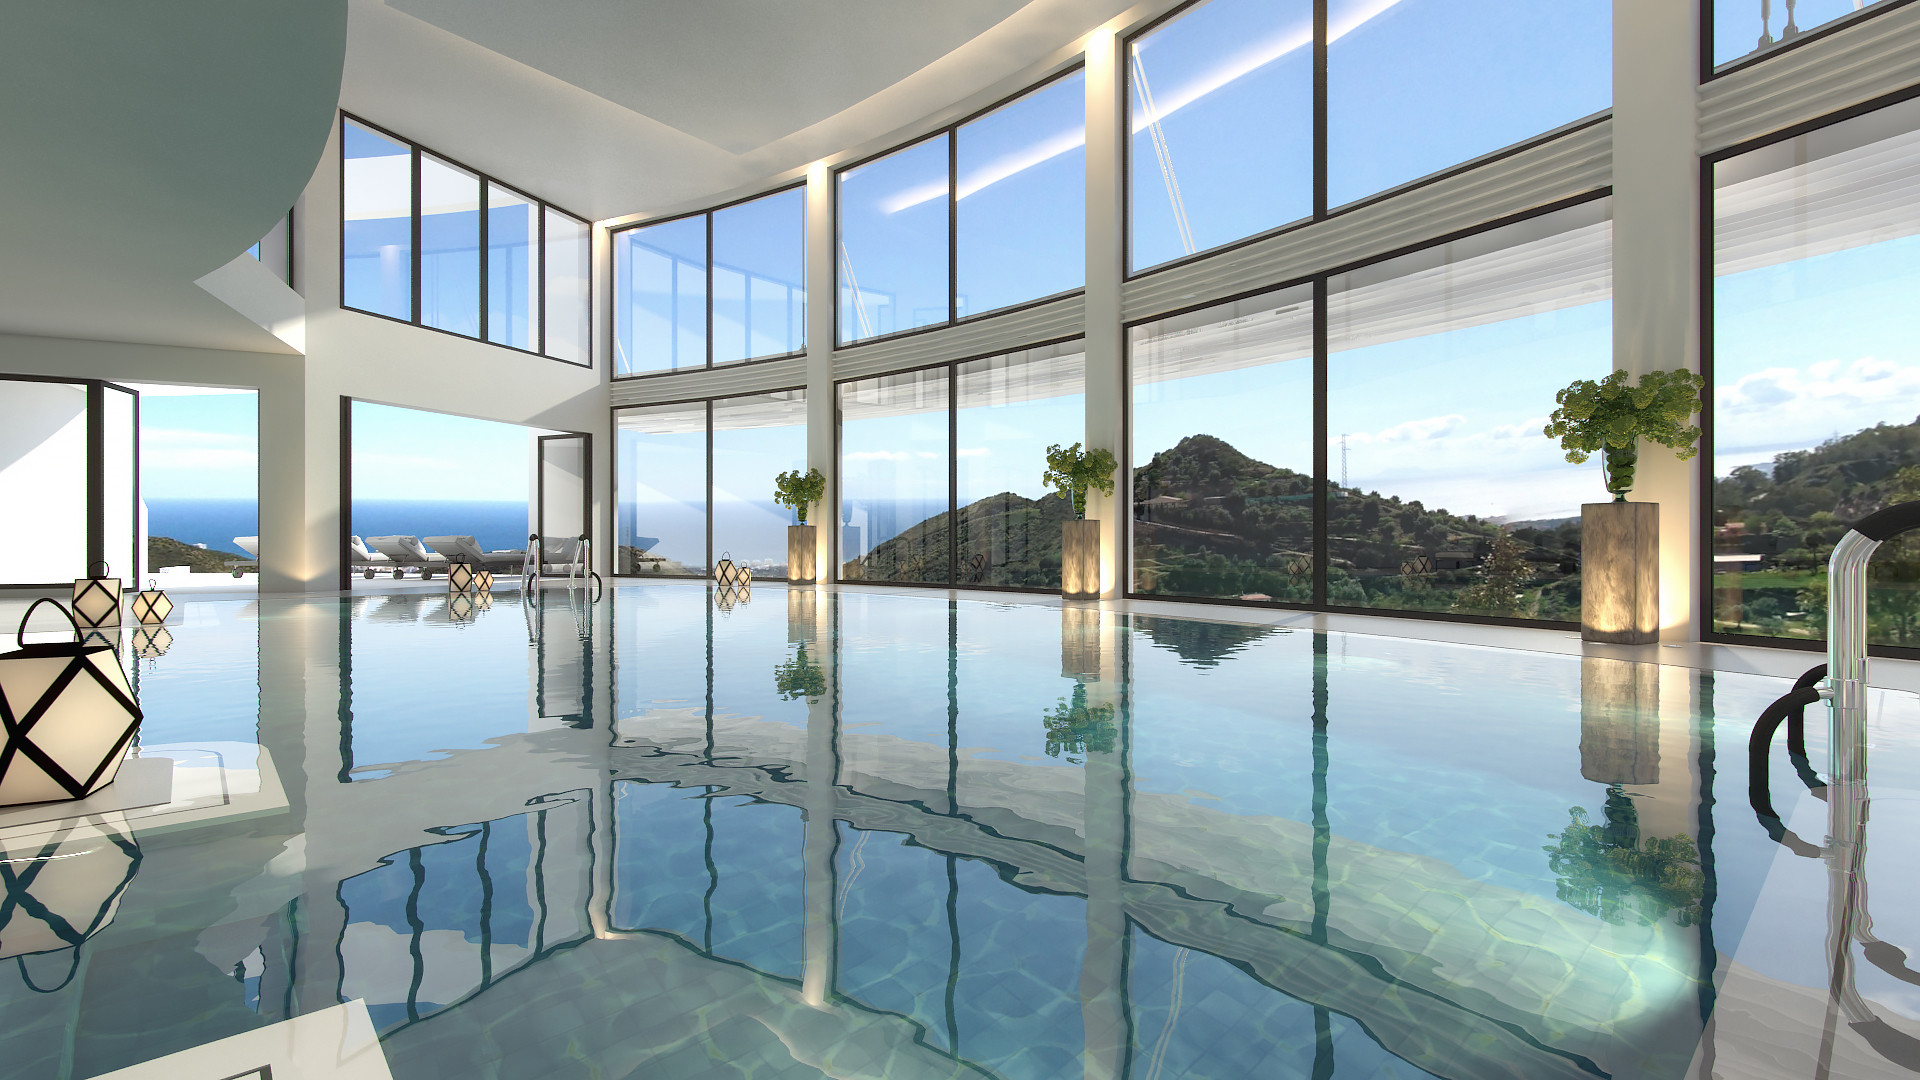 Small luxury residence designed by Villarroel Torrico in Marbella